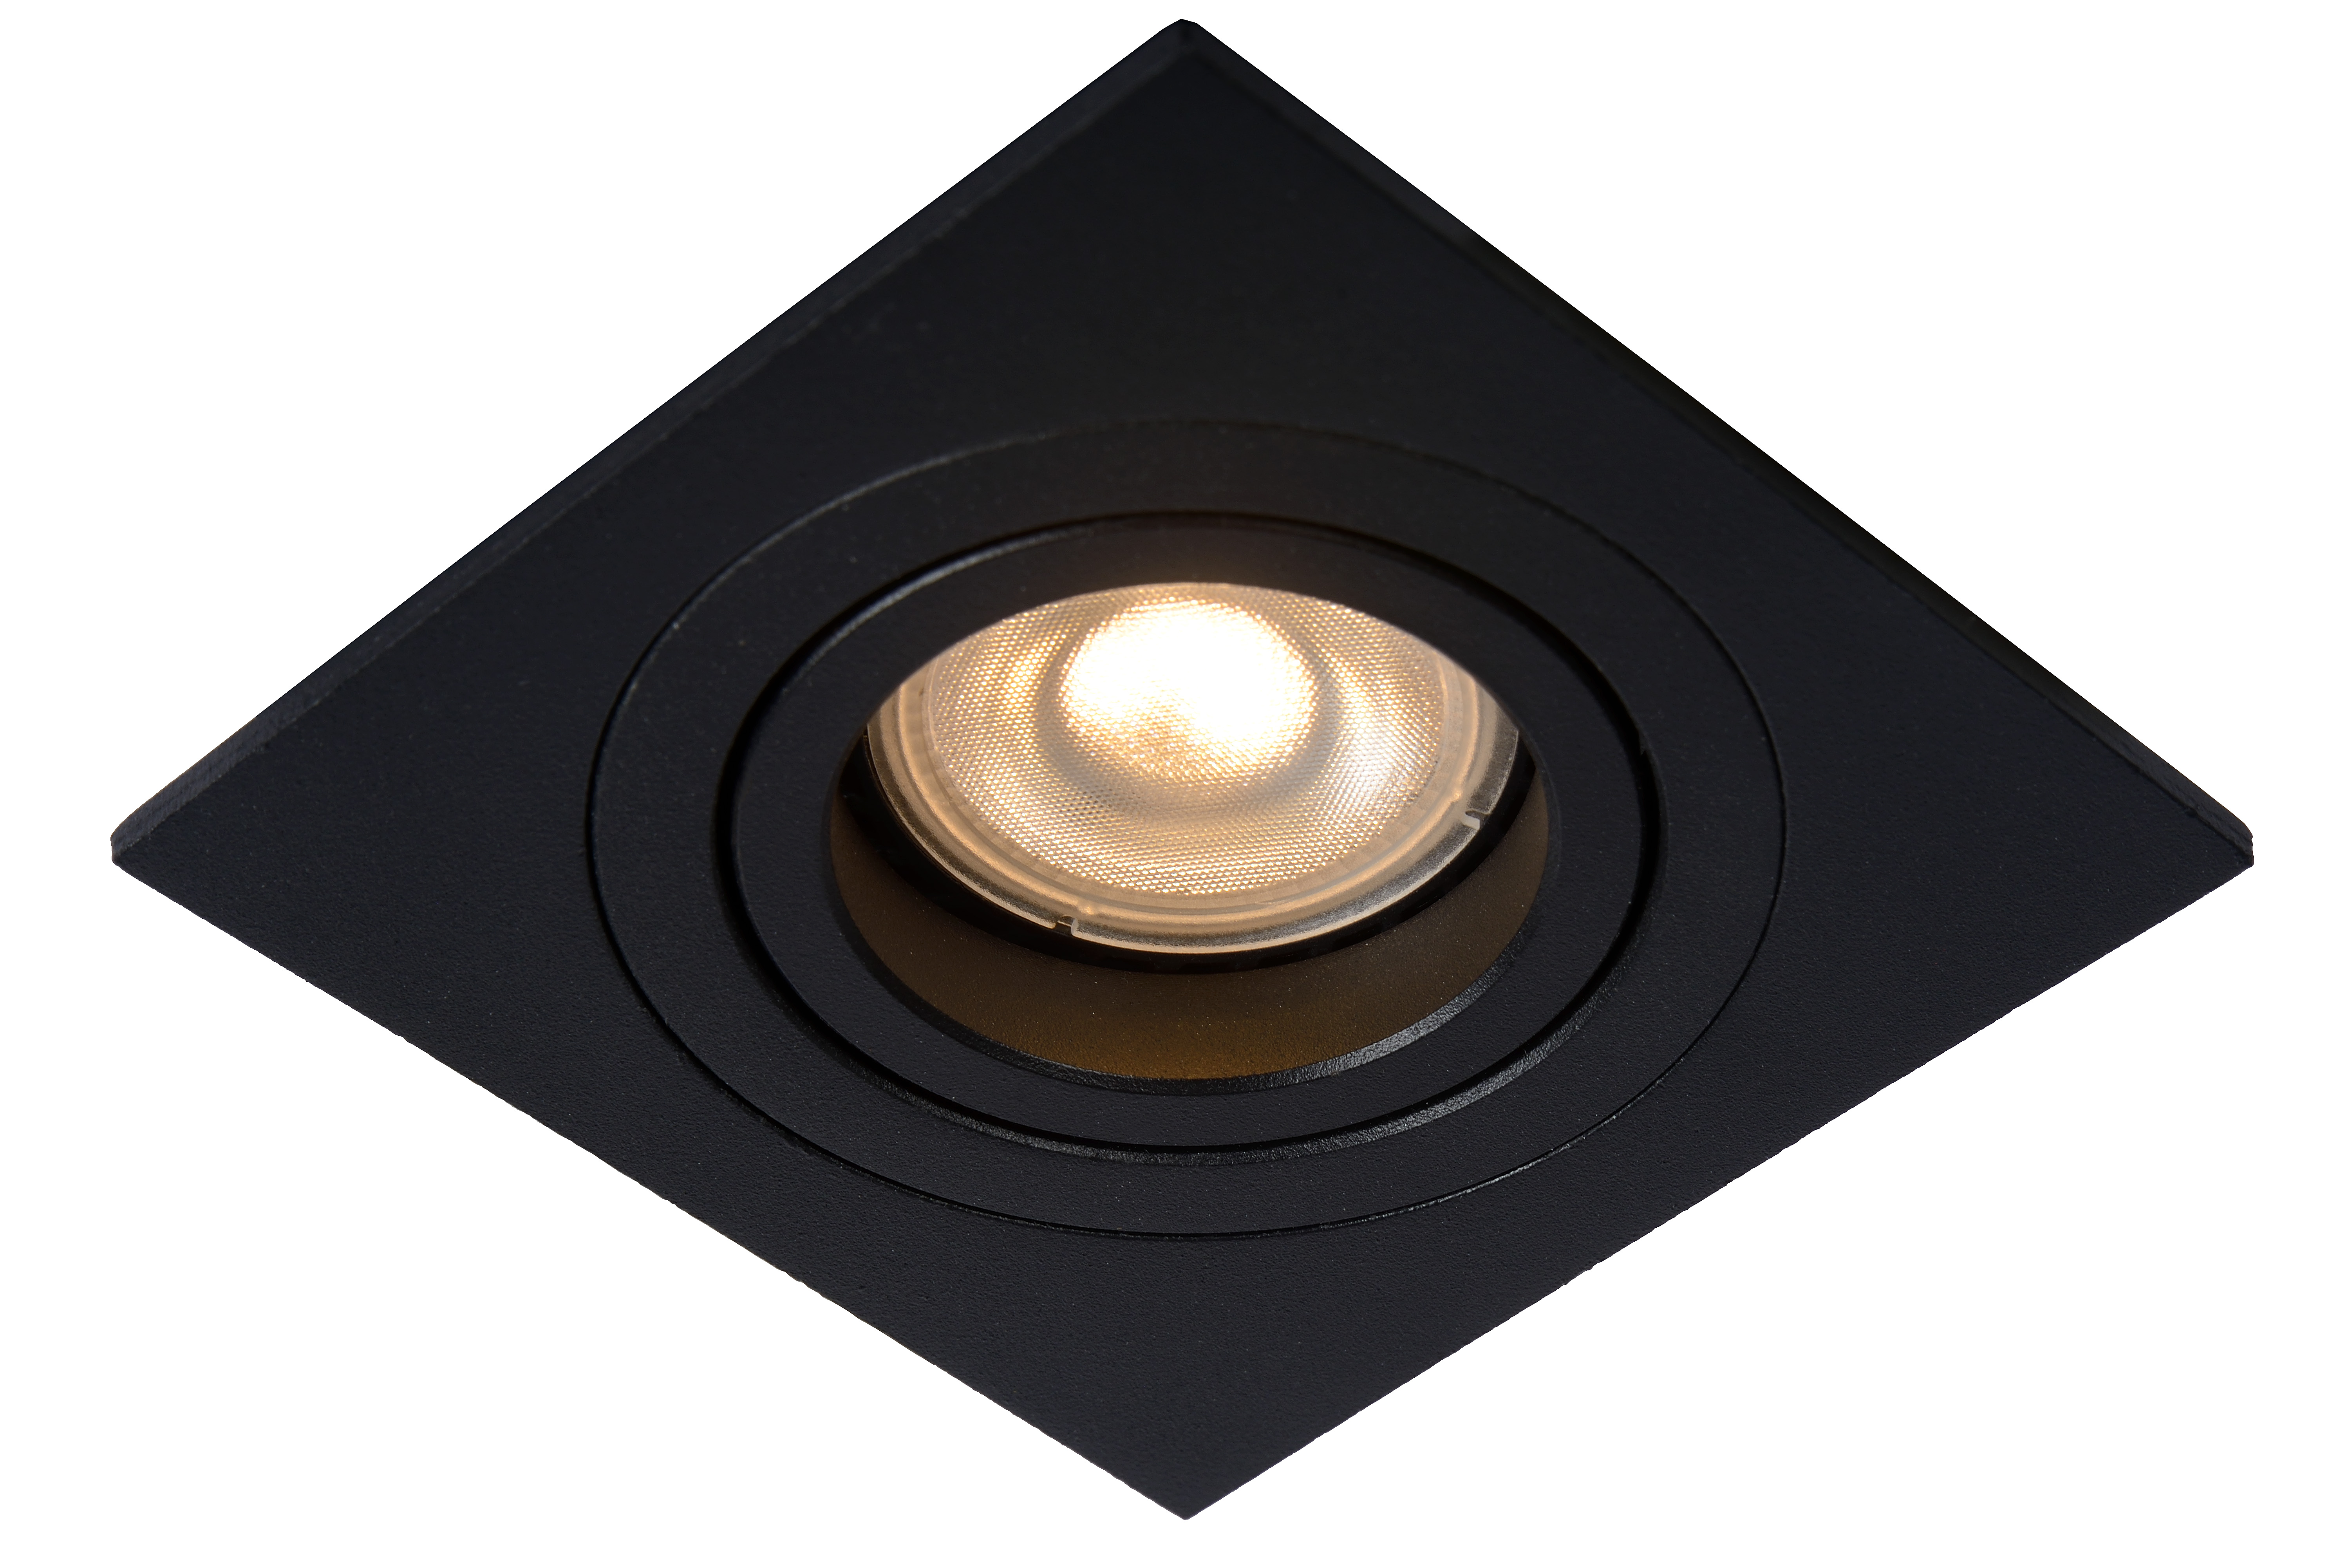 With 1 x 5W Cool White GU10 LED Bulb Modern Single Eyeball Ceiling/Wall Adjustable Black Chrome Spotlight 